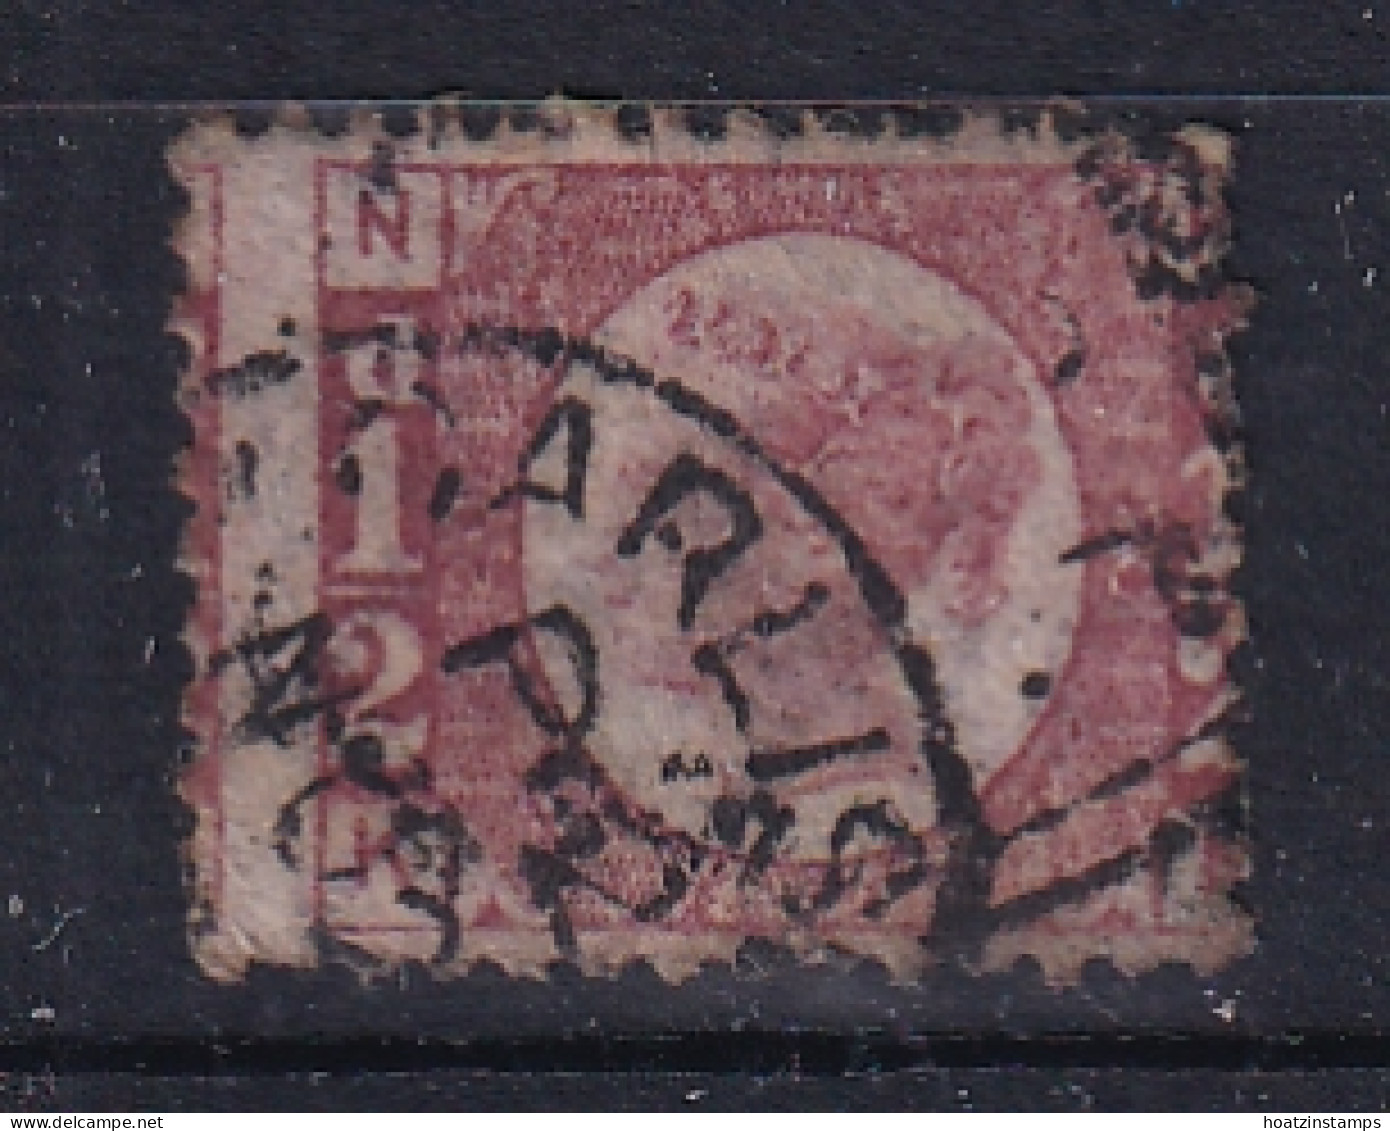 G.B.: 1870/79   QV   ½d    [Plate 20]   Used - Gebraucht